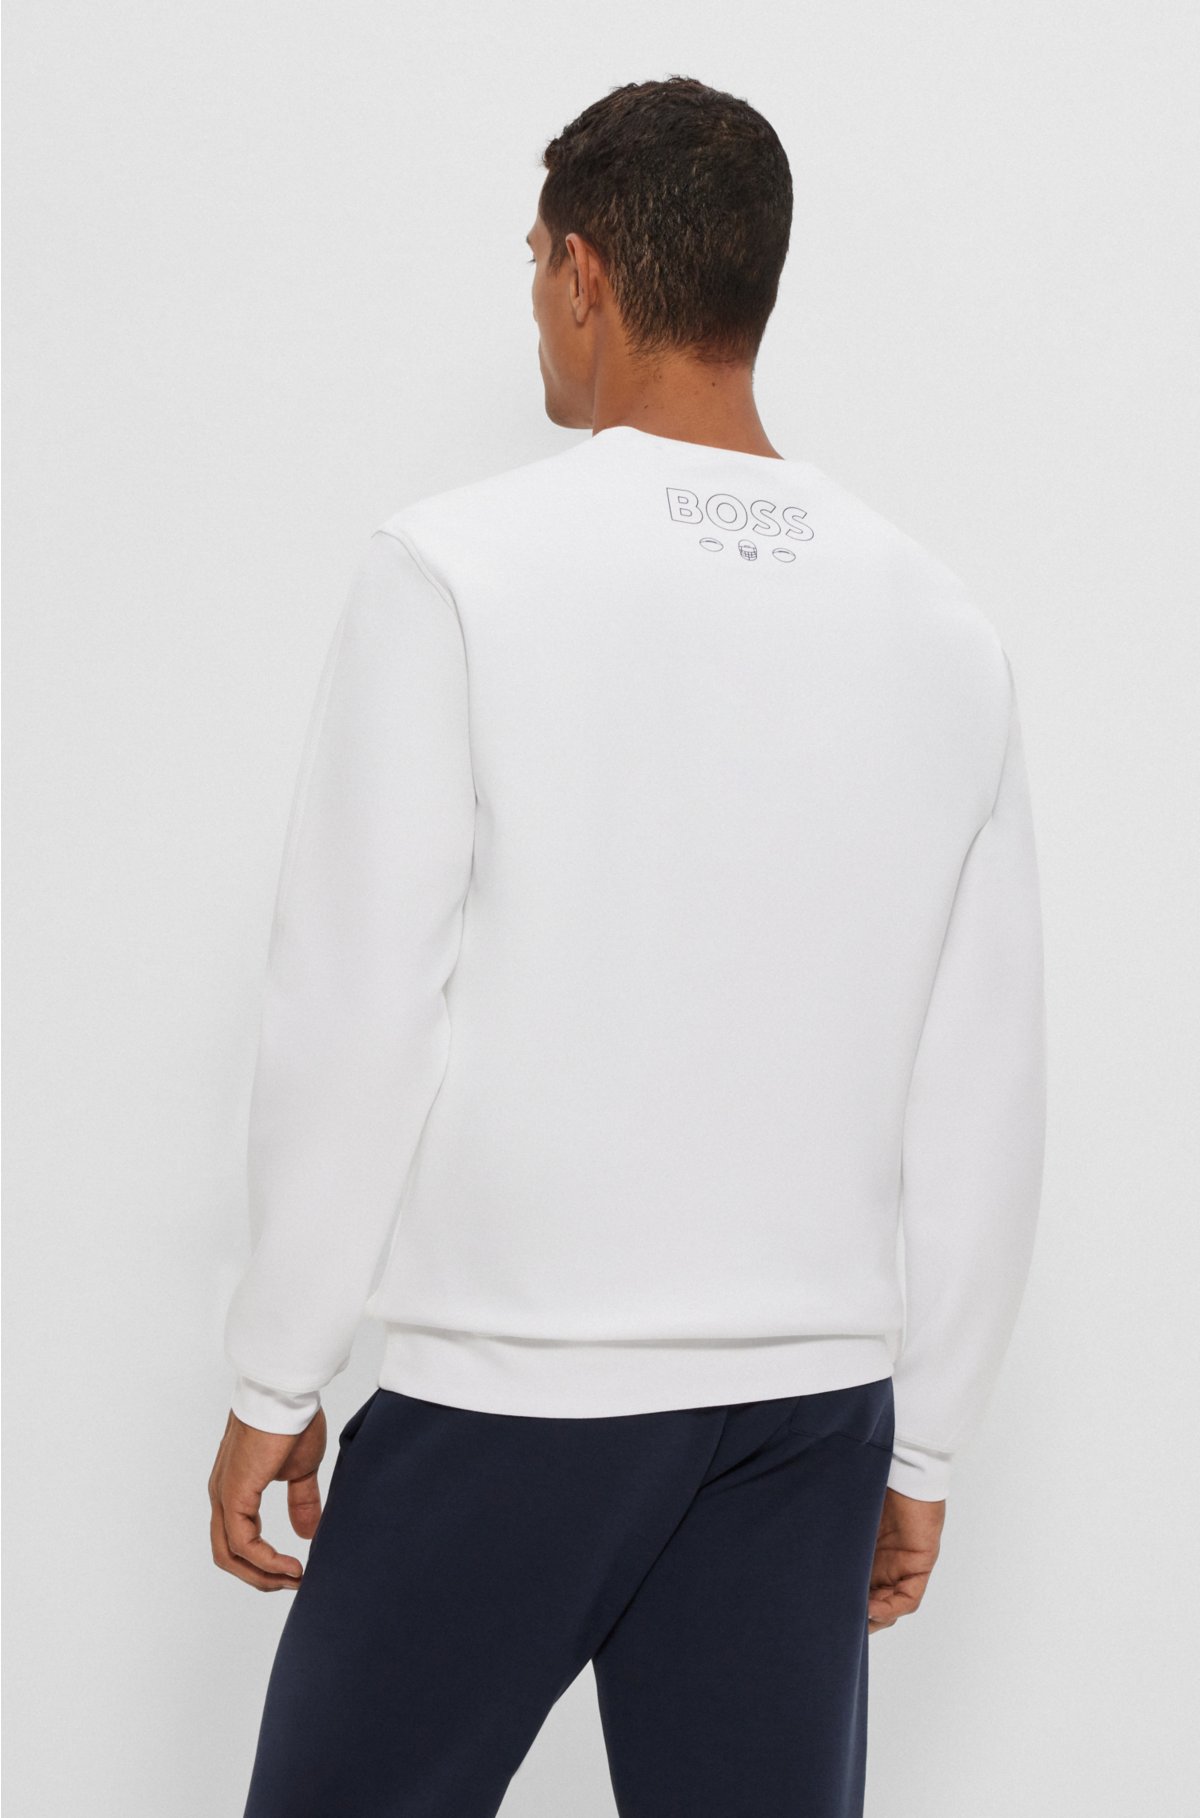 BOSS x NFL cotton-blend sweatshirt with collaborative branding, Patriots